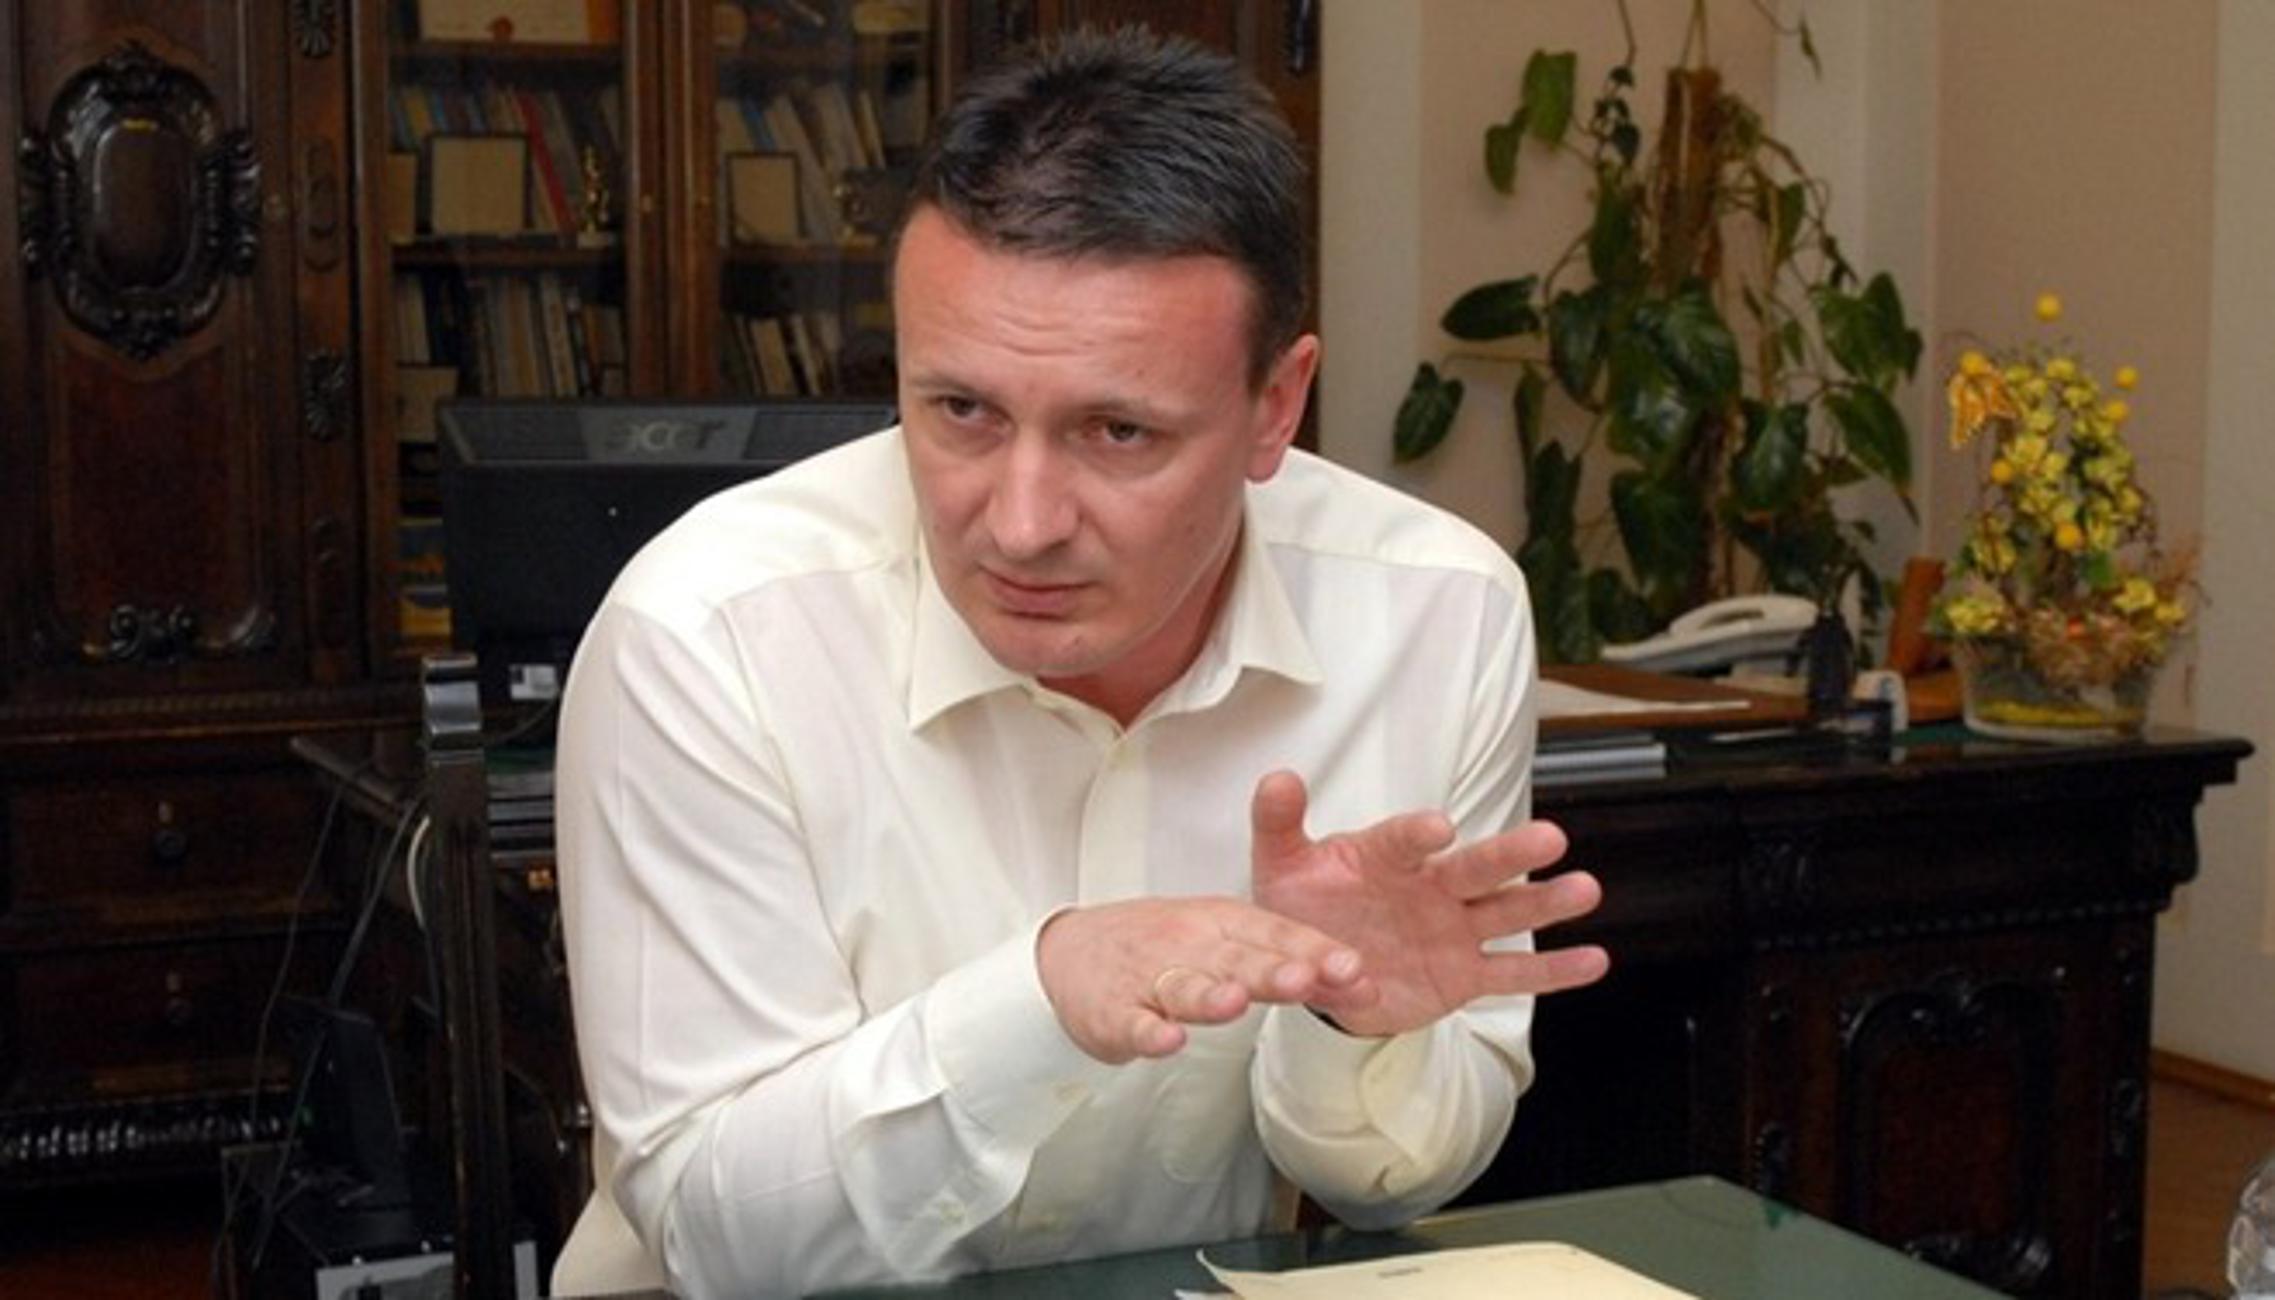 Župan, Danijel Marušić